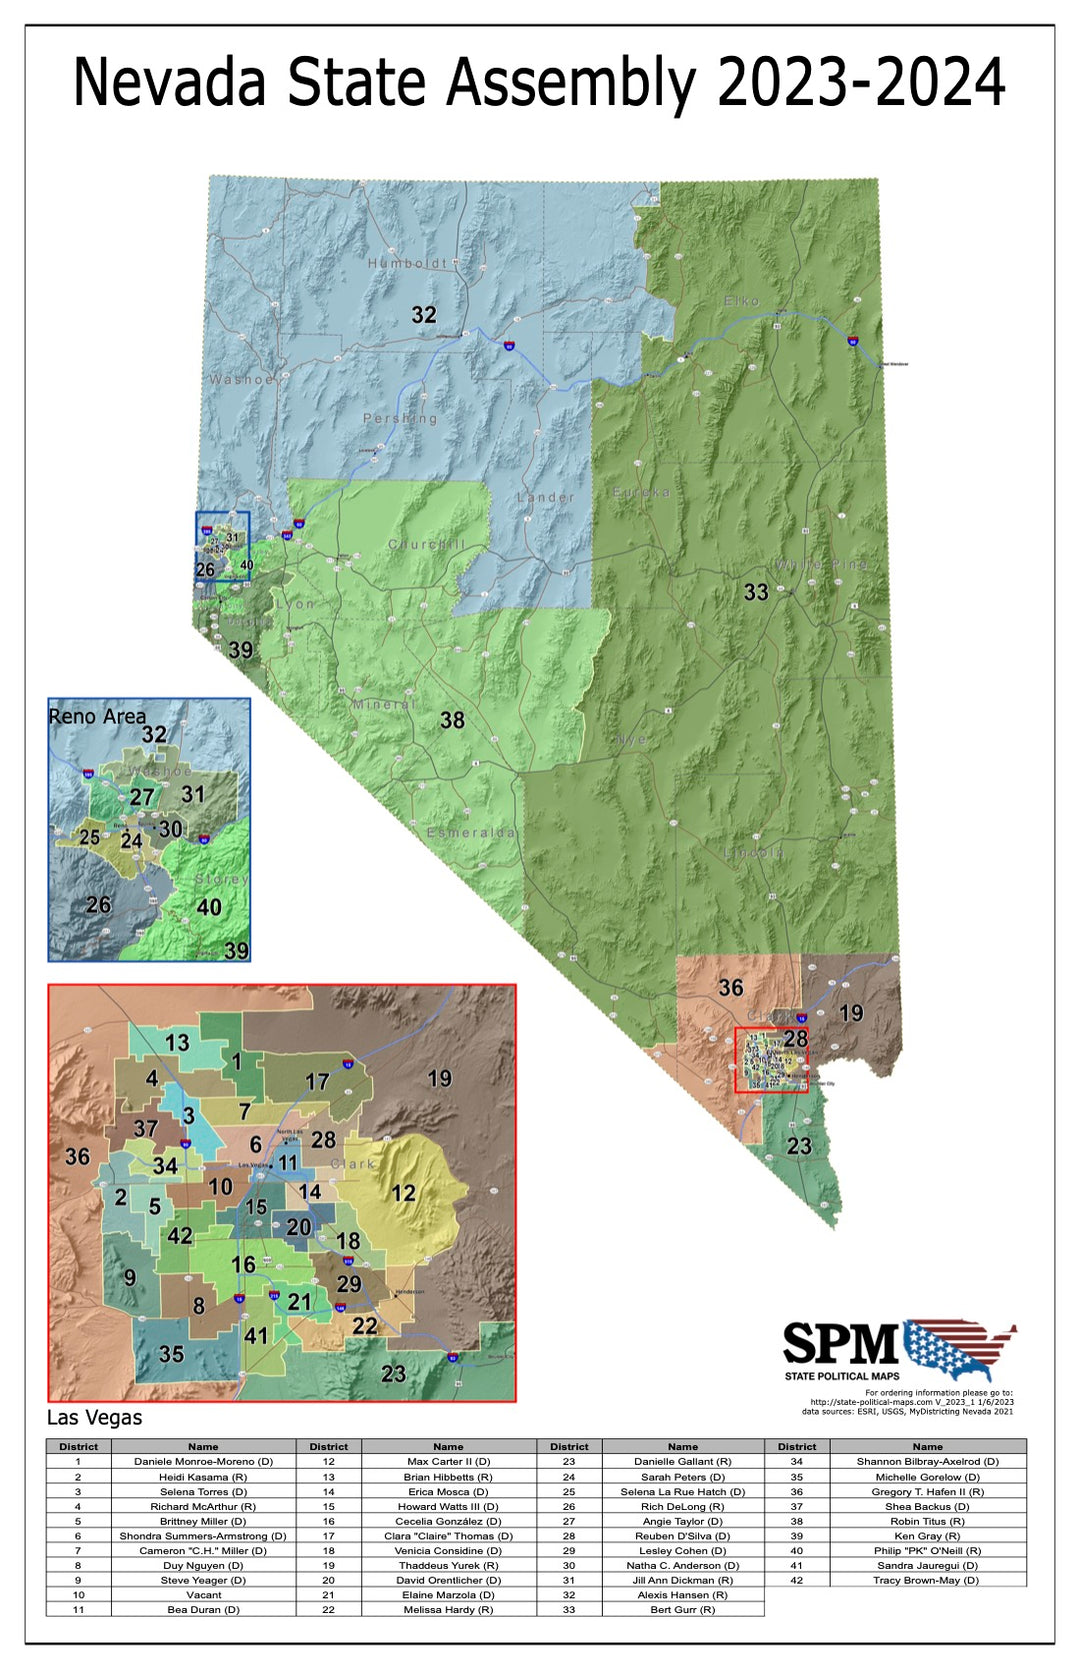 Nevada Political and State Legislative Wall Maps State Political Maps